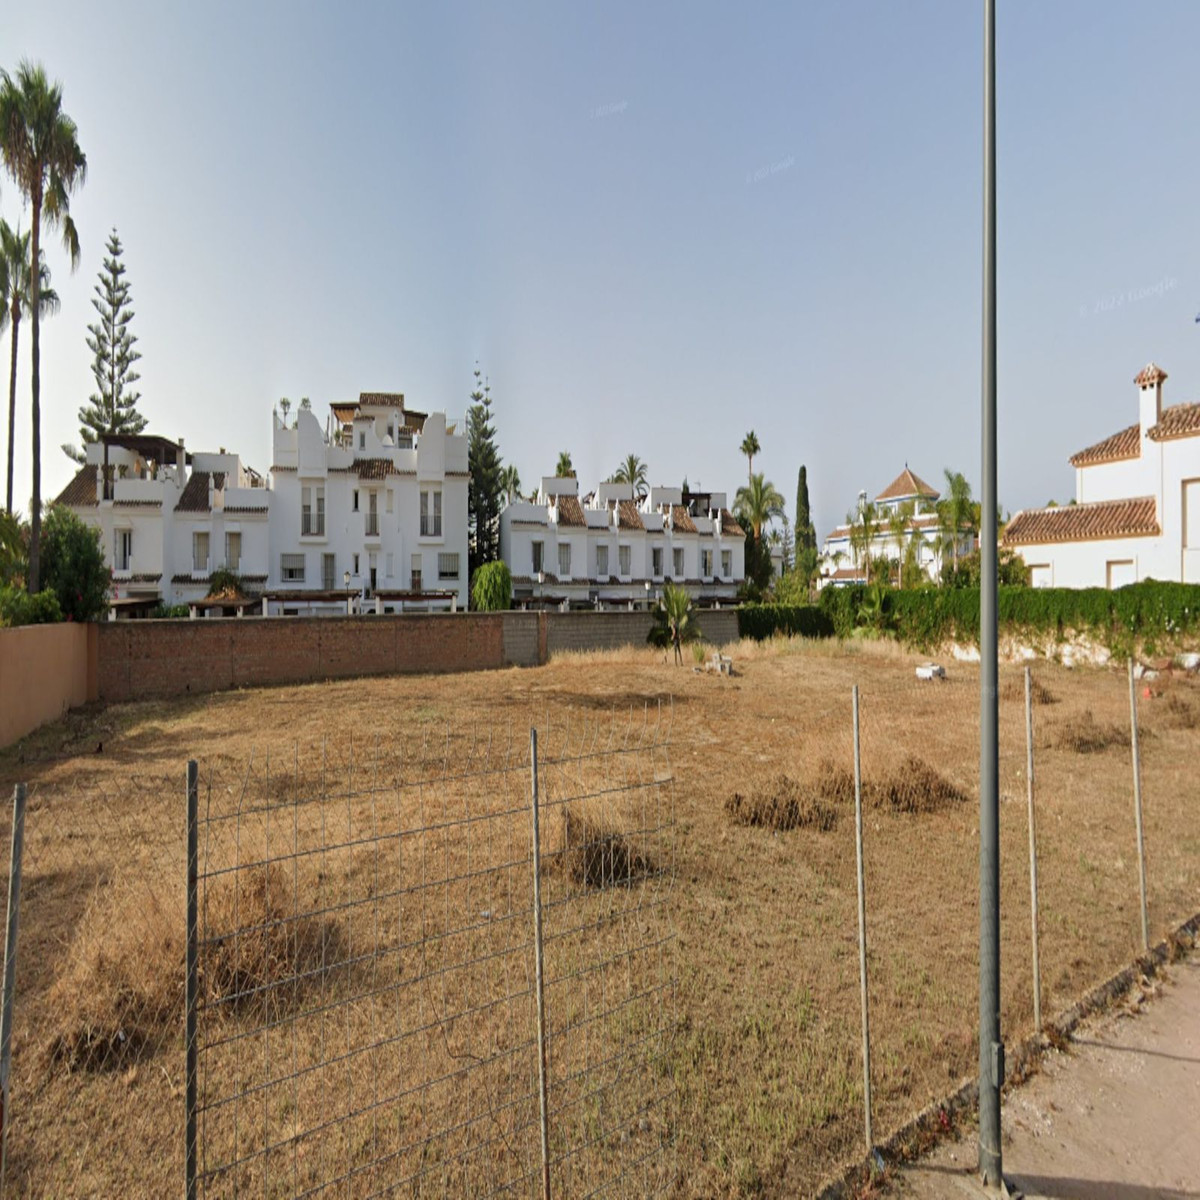 						Terreno  Residencial
													en venta 
																			 en San Pedro de Alcántara
					